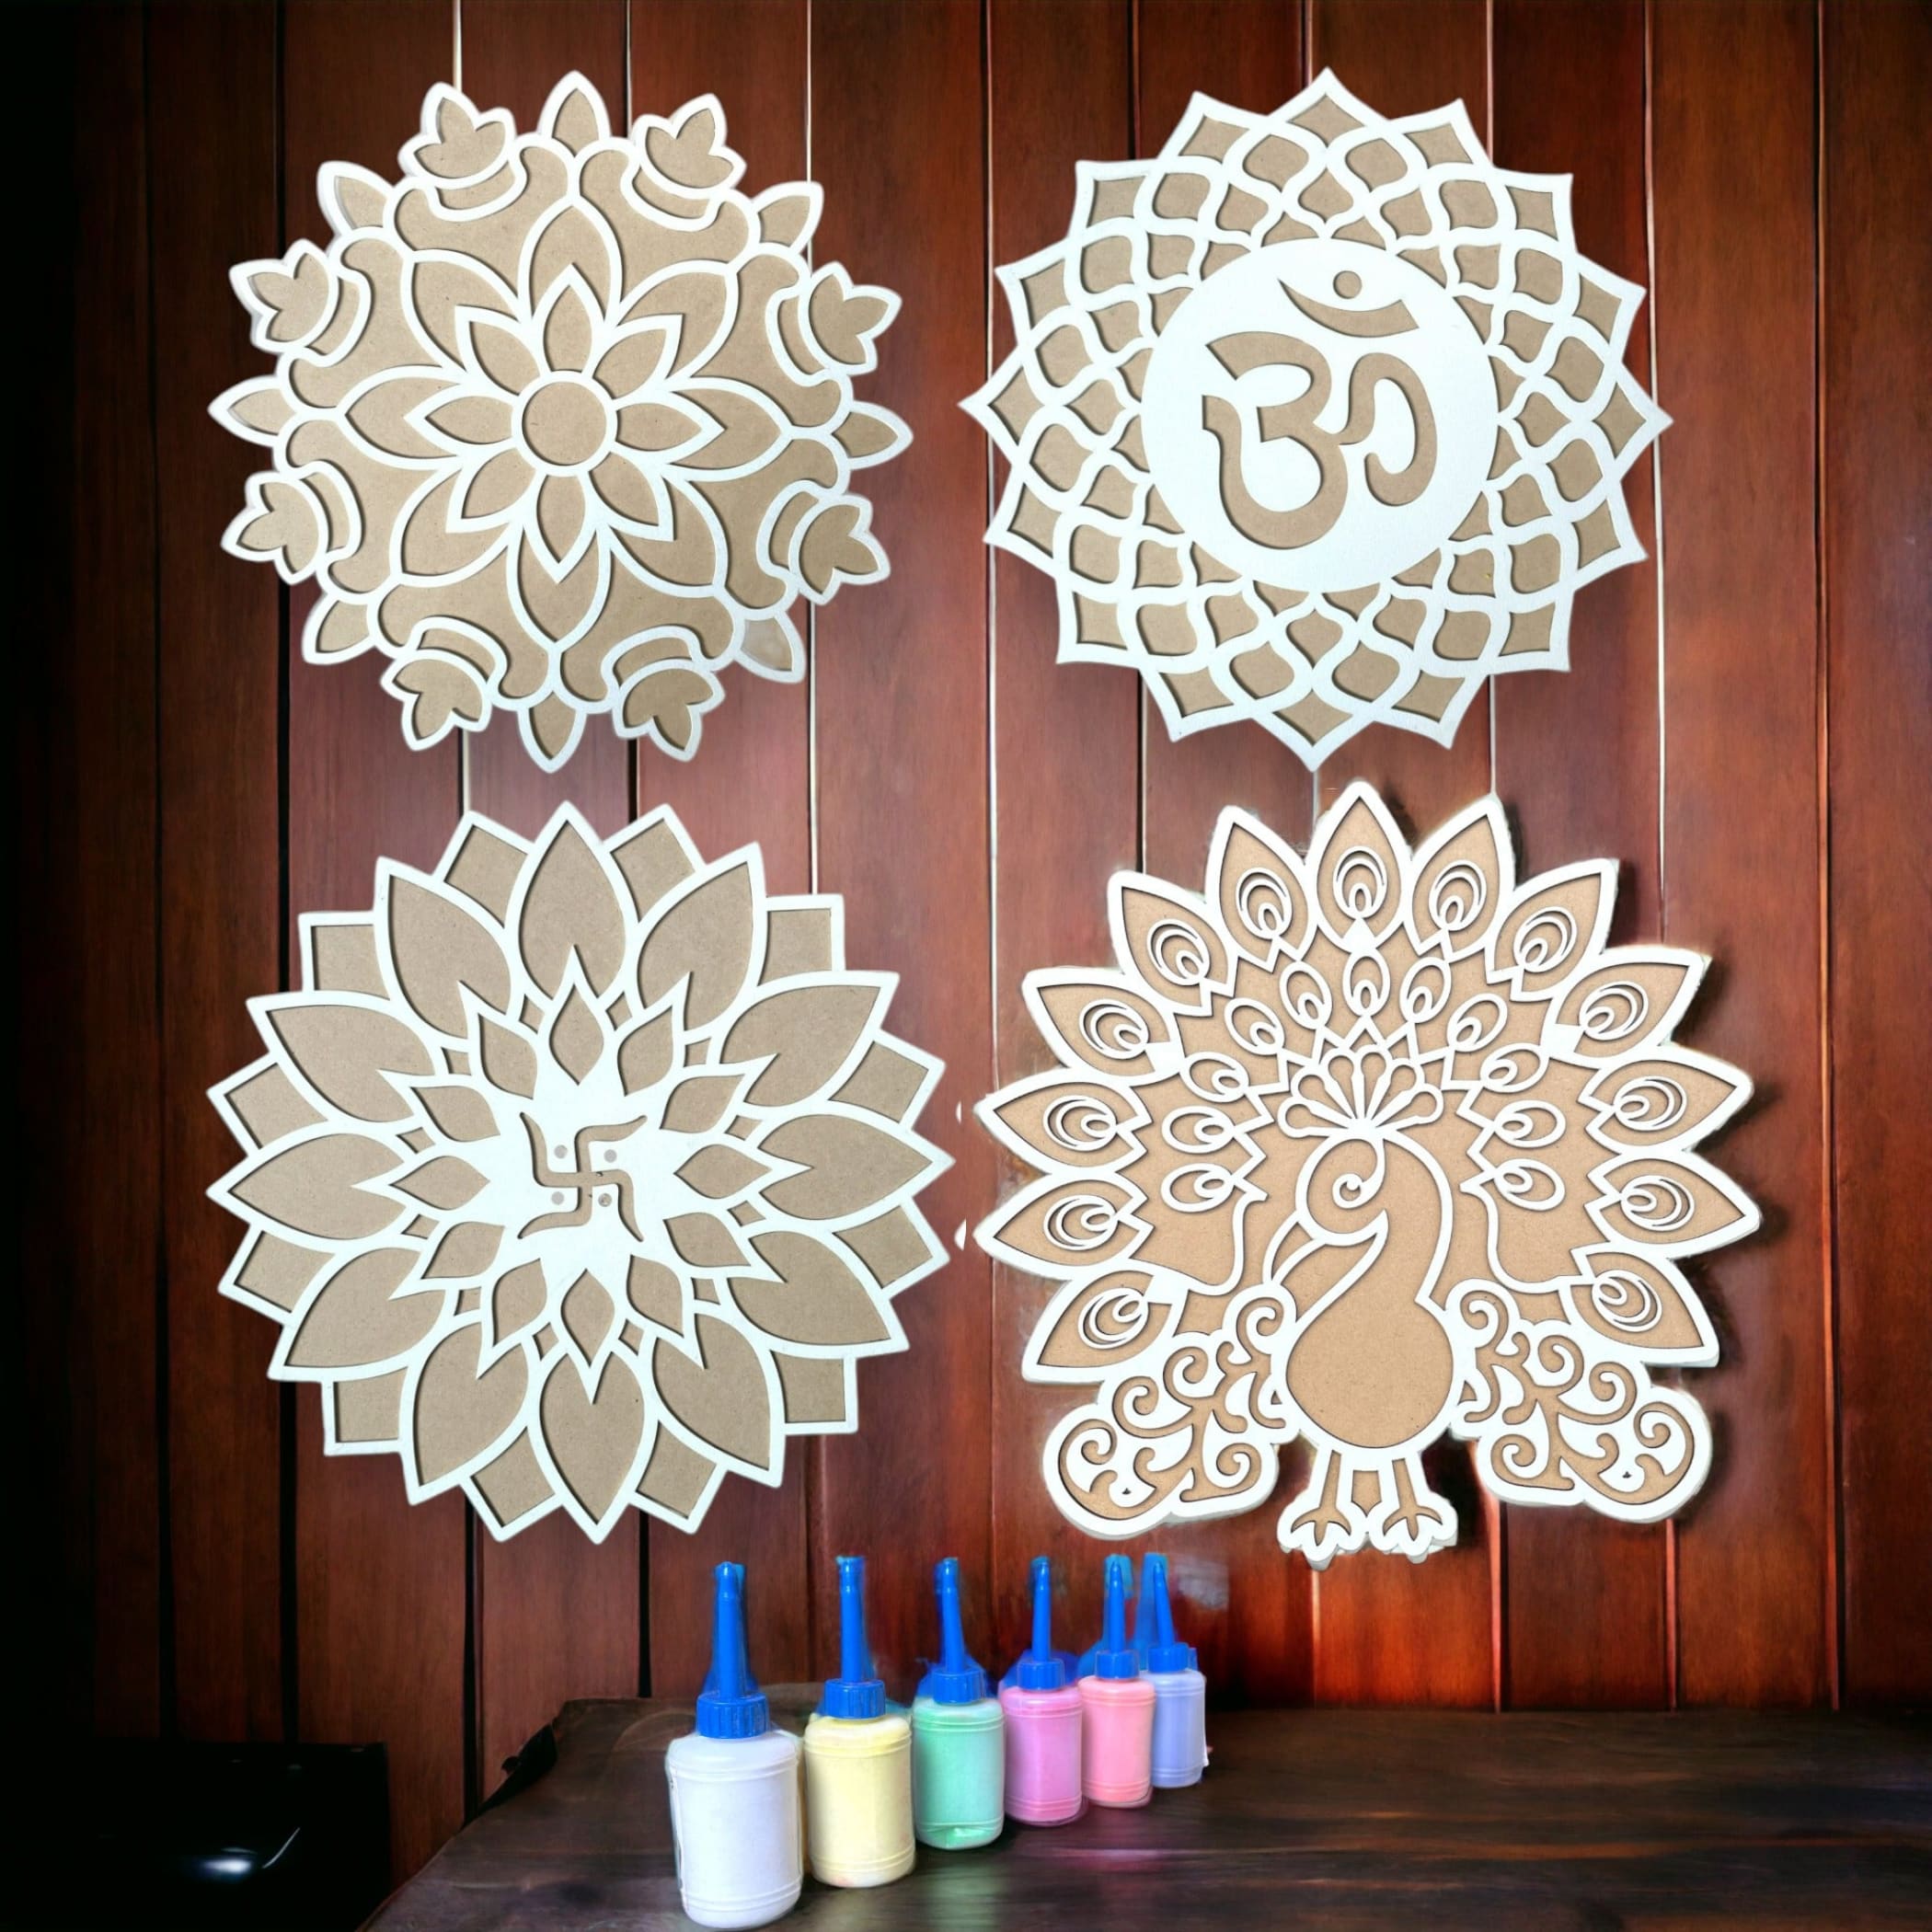 12 inch diy mdf reusable rangoli mat kit decorations stencil